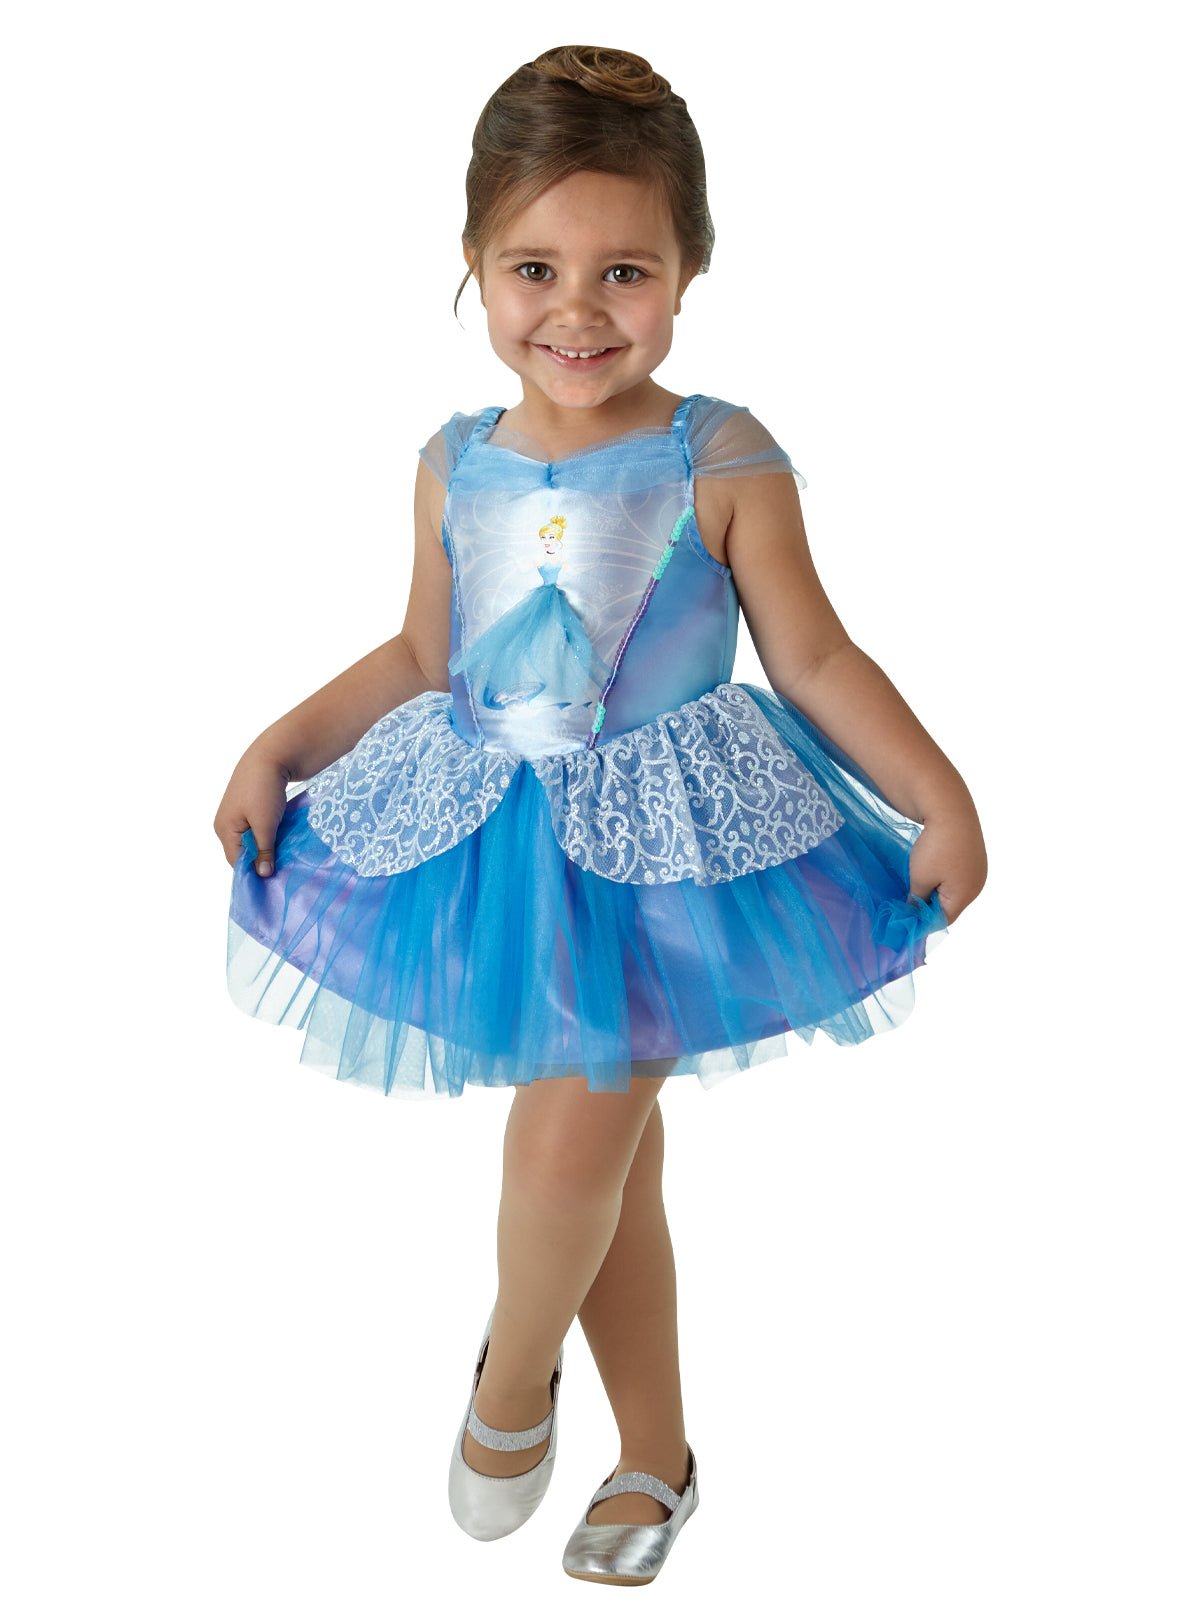 Shop the Look: Cinderella Ballerina Costume for Kids